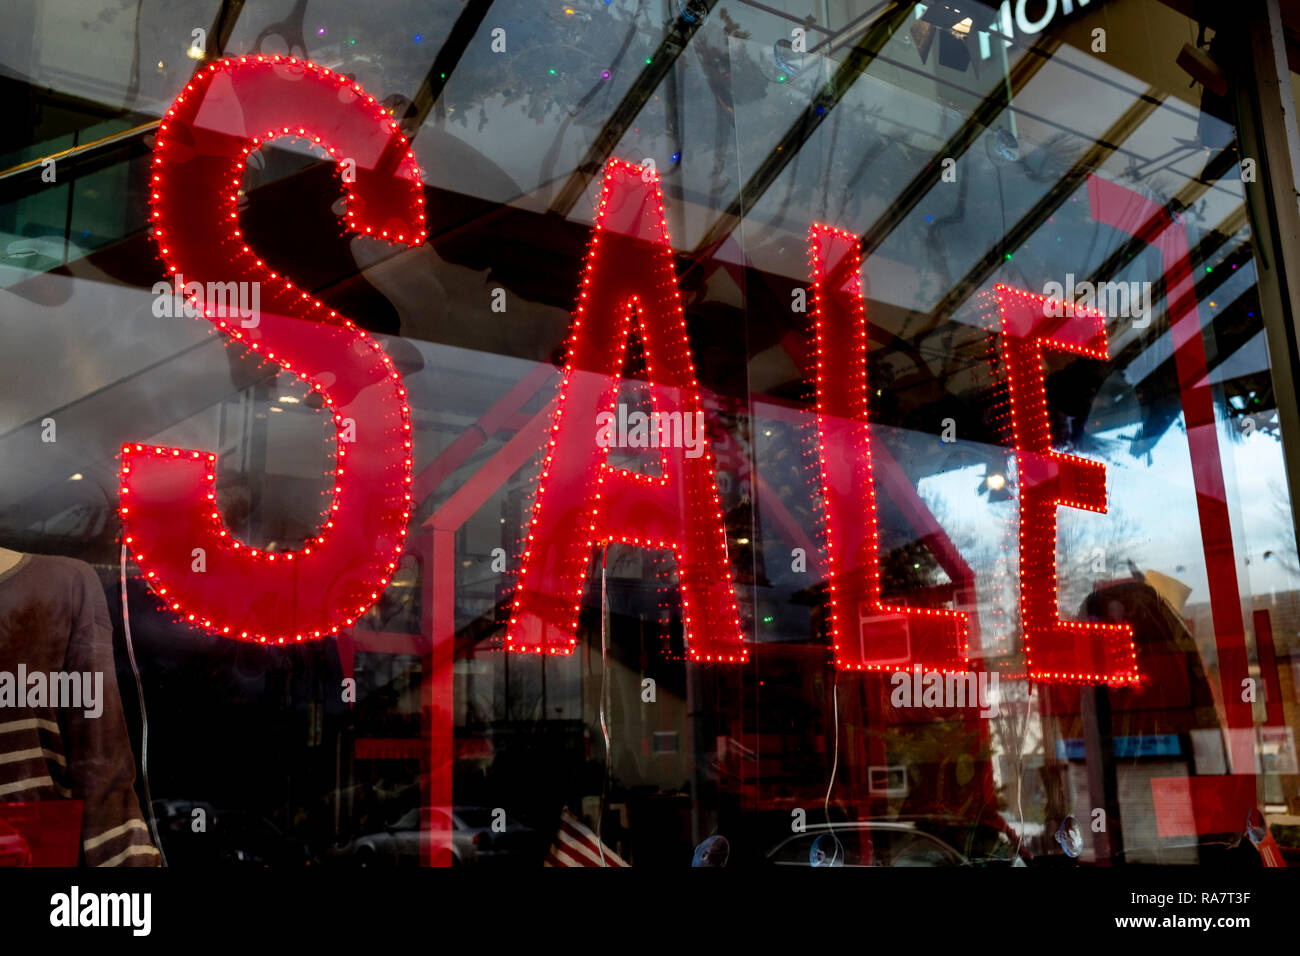 Illuminated sale sign in shop window UK Stock Photo